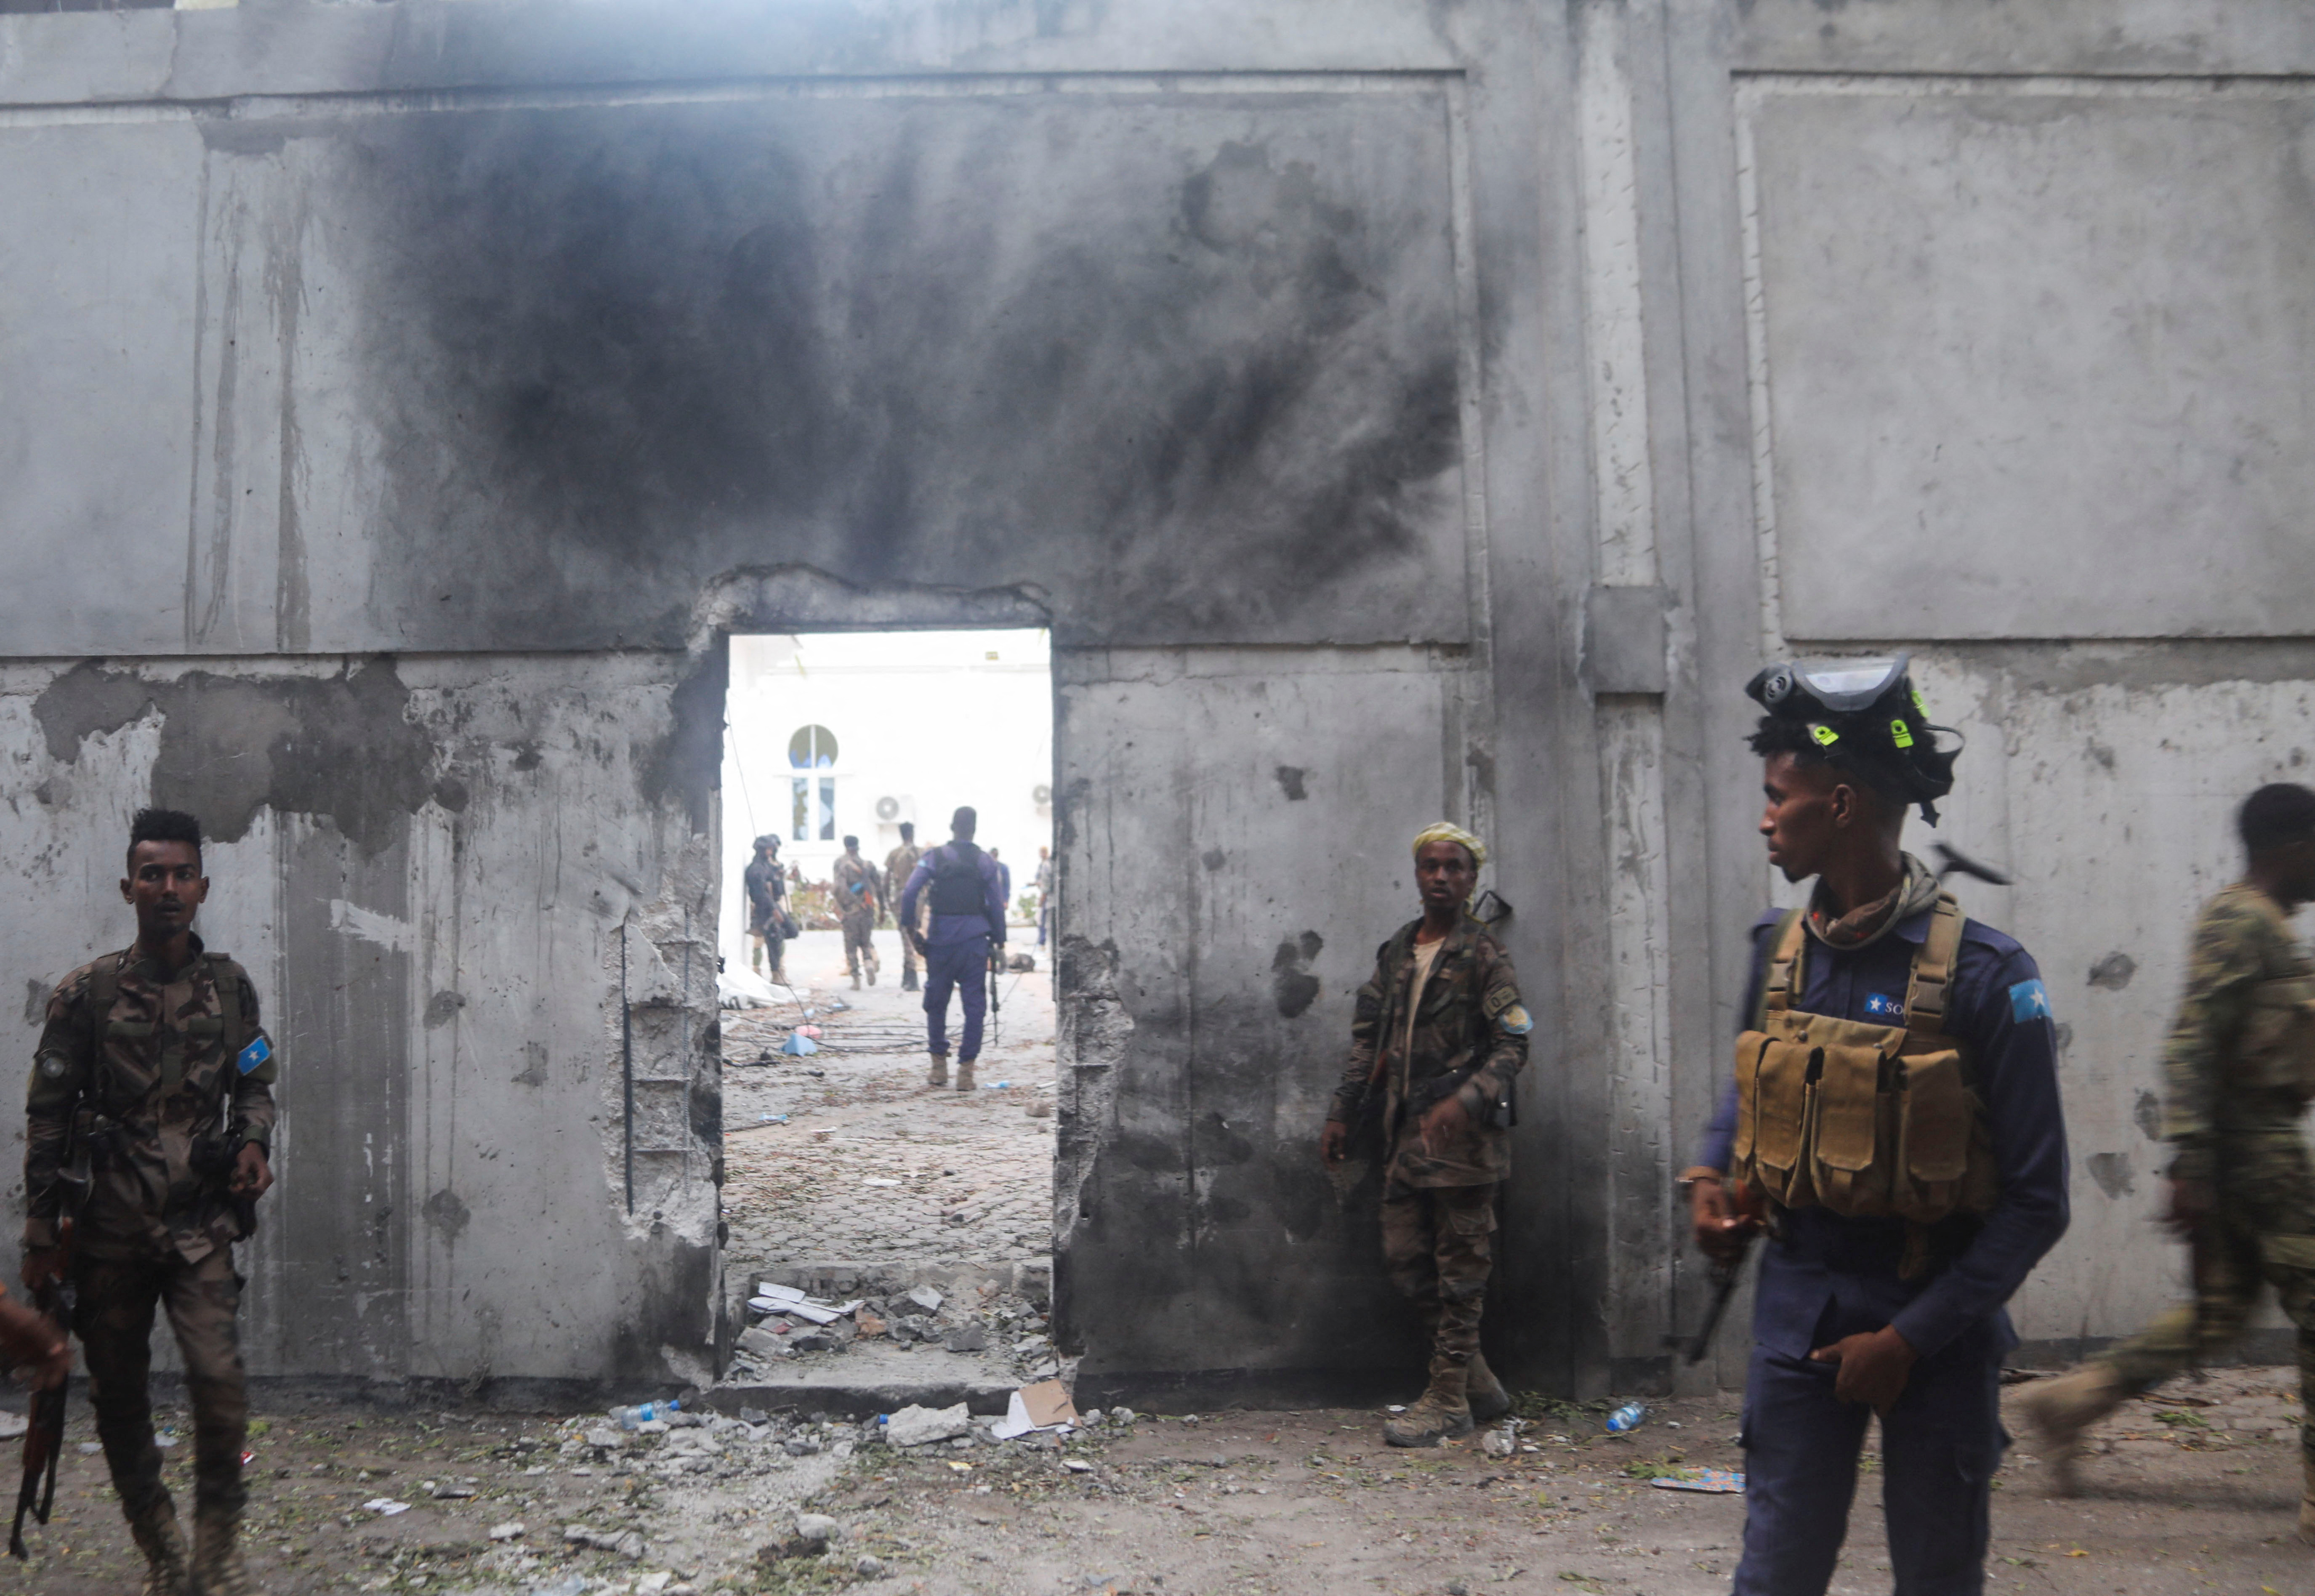 Blast heard near mayor's office in Mogadishu